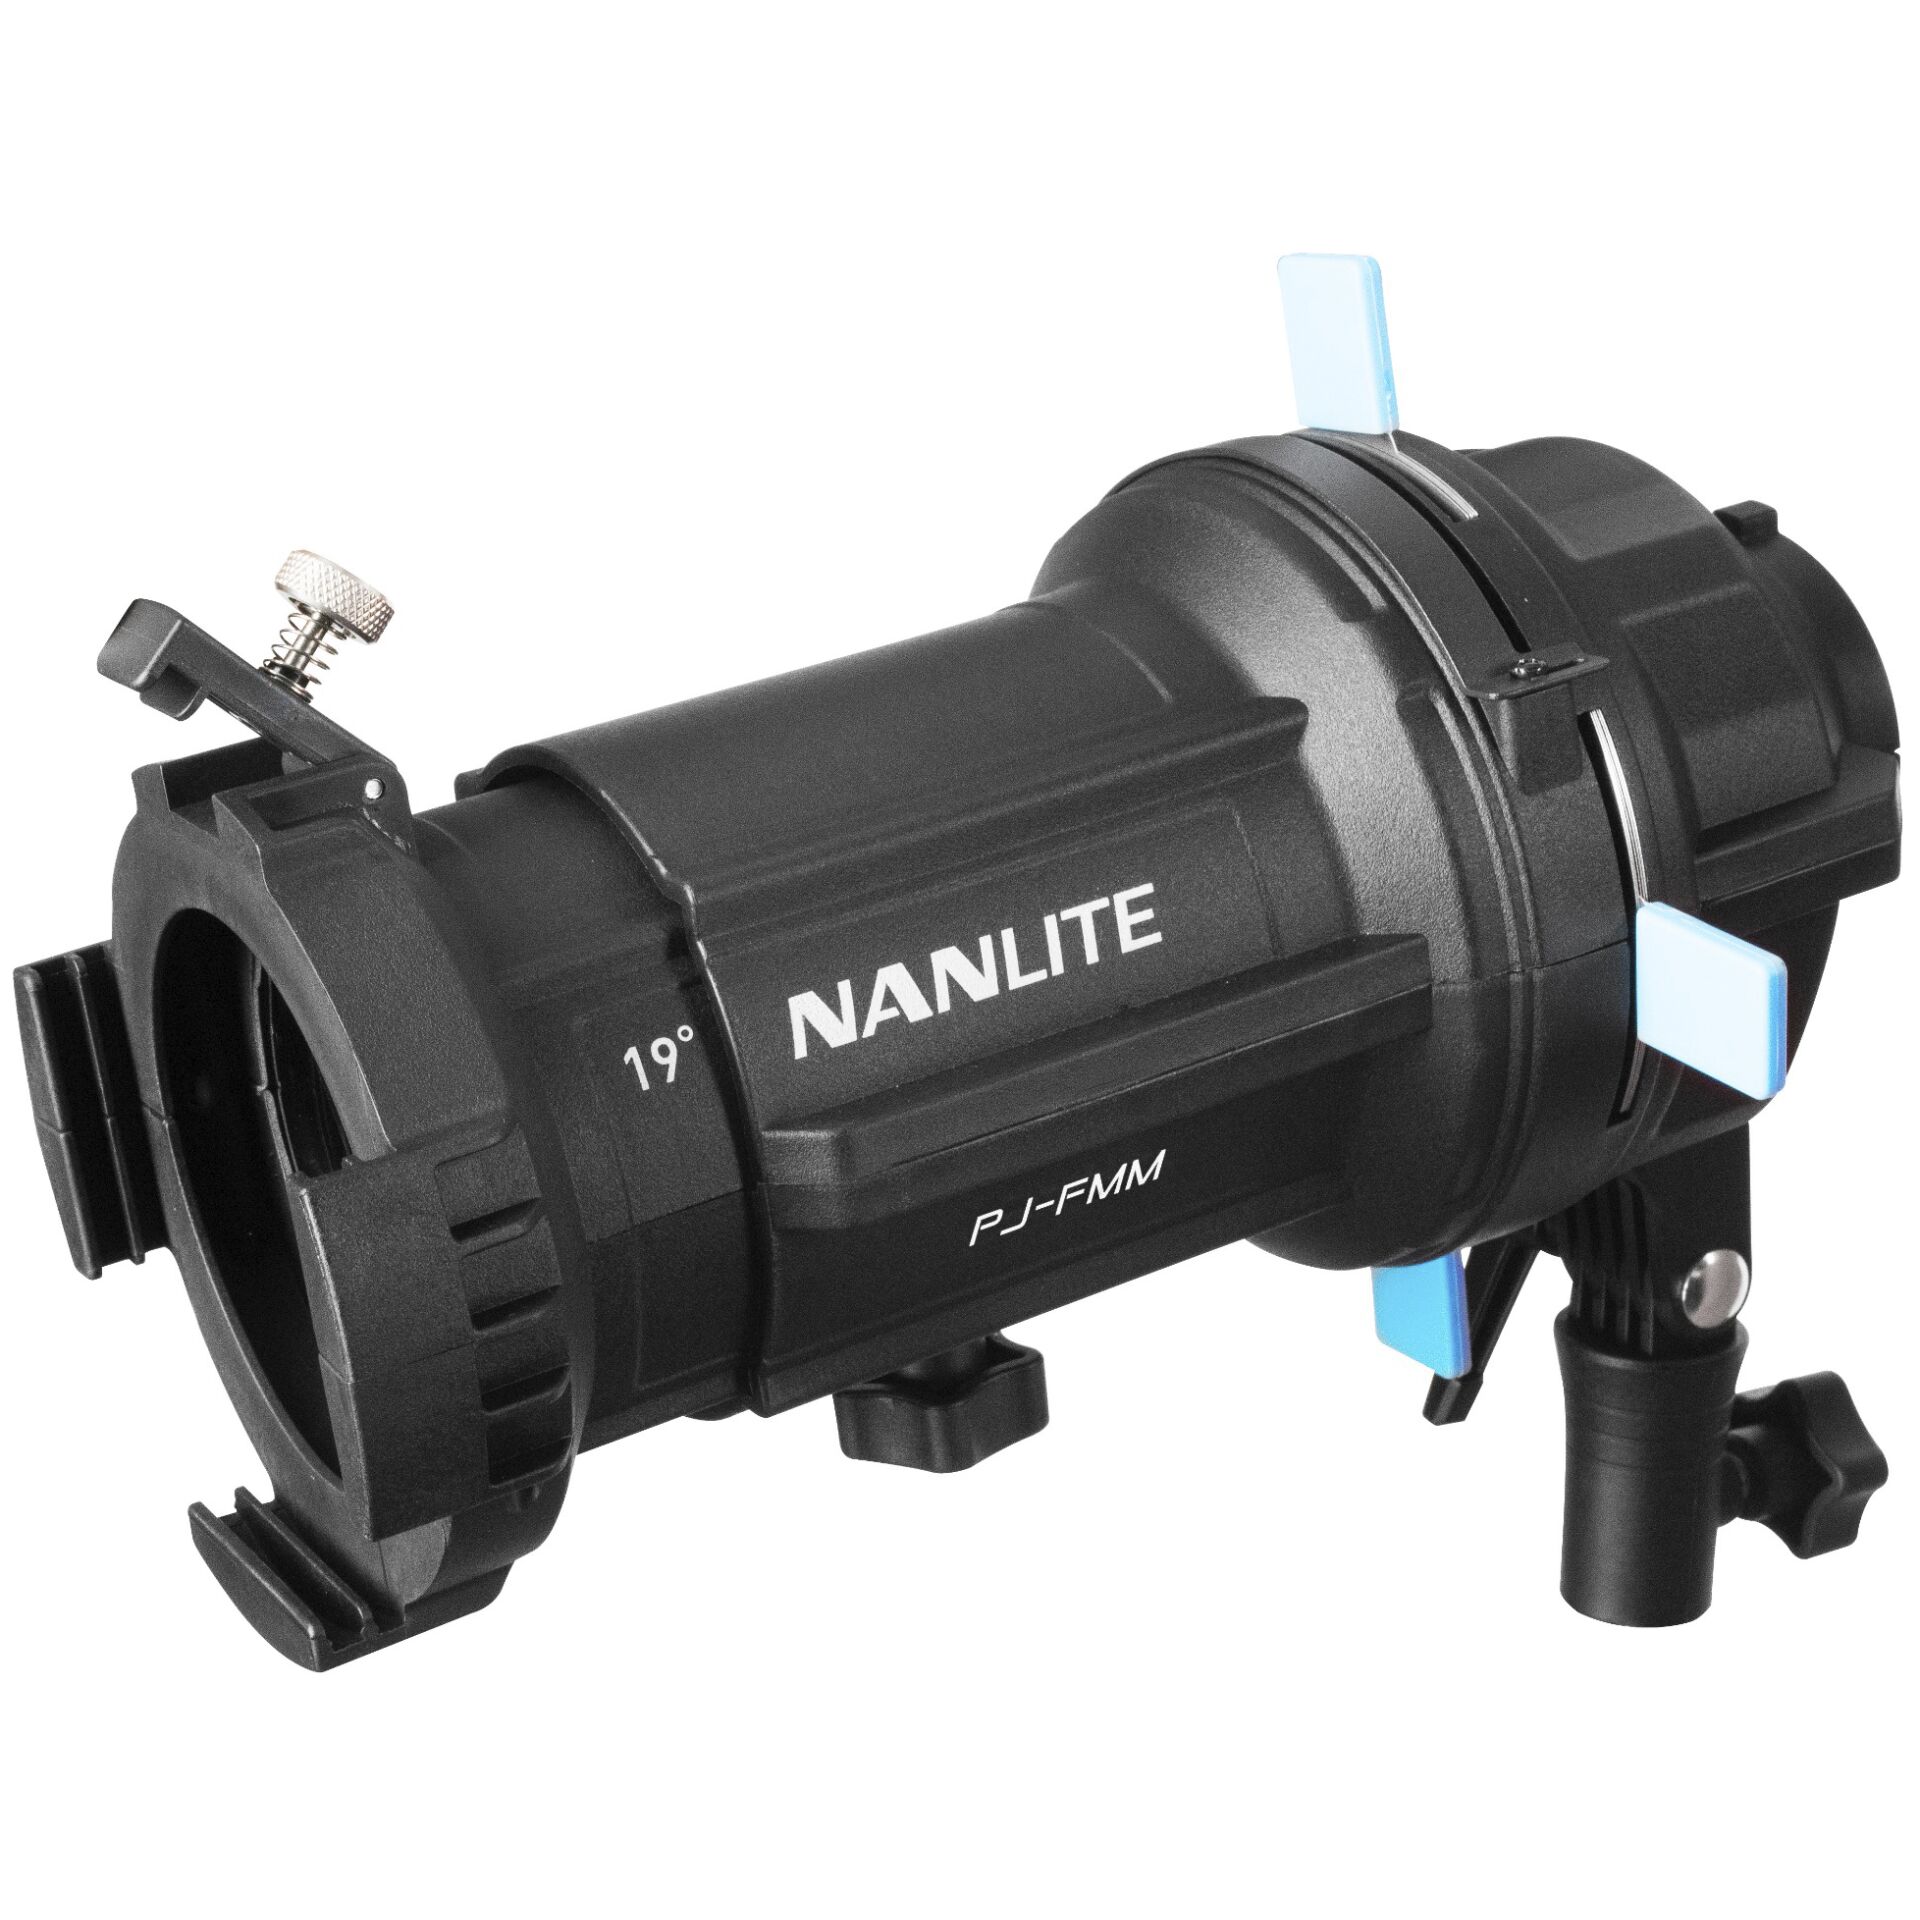 Nanlite PJ-FZ60-36 Projektions- vorsatz für Forza 60 60B 36°